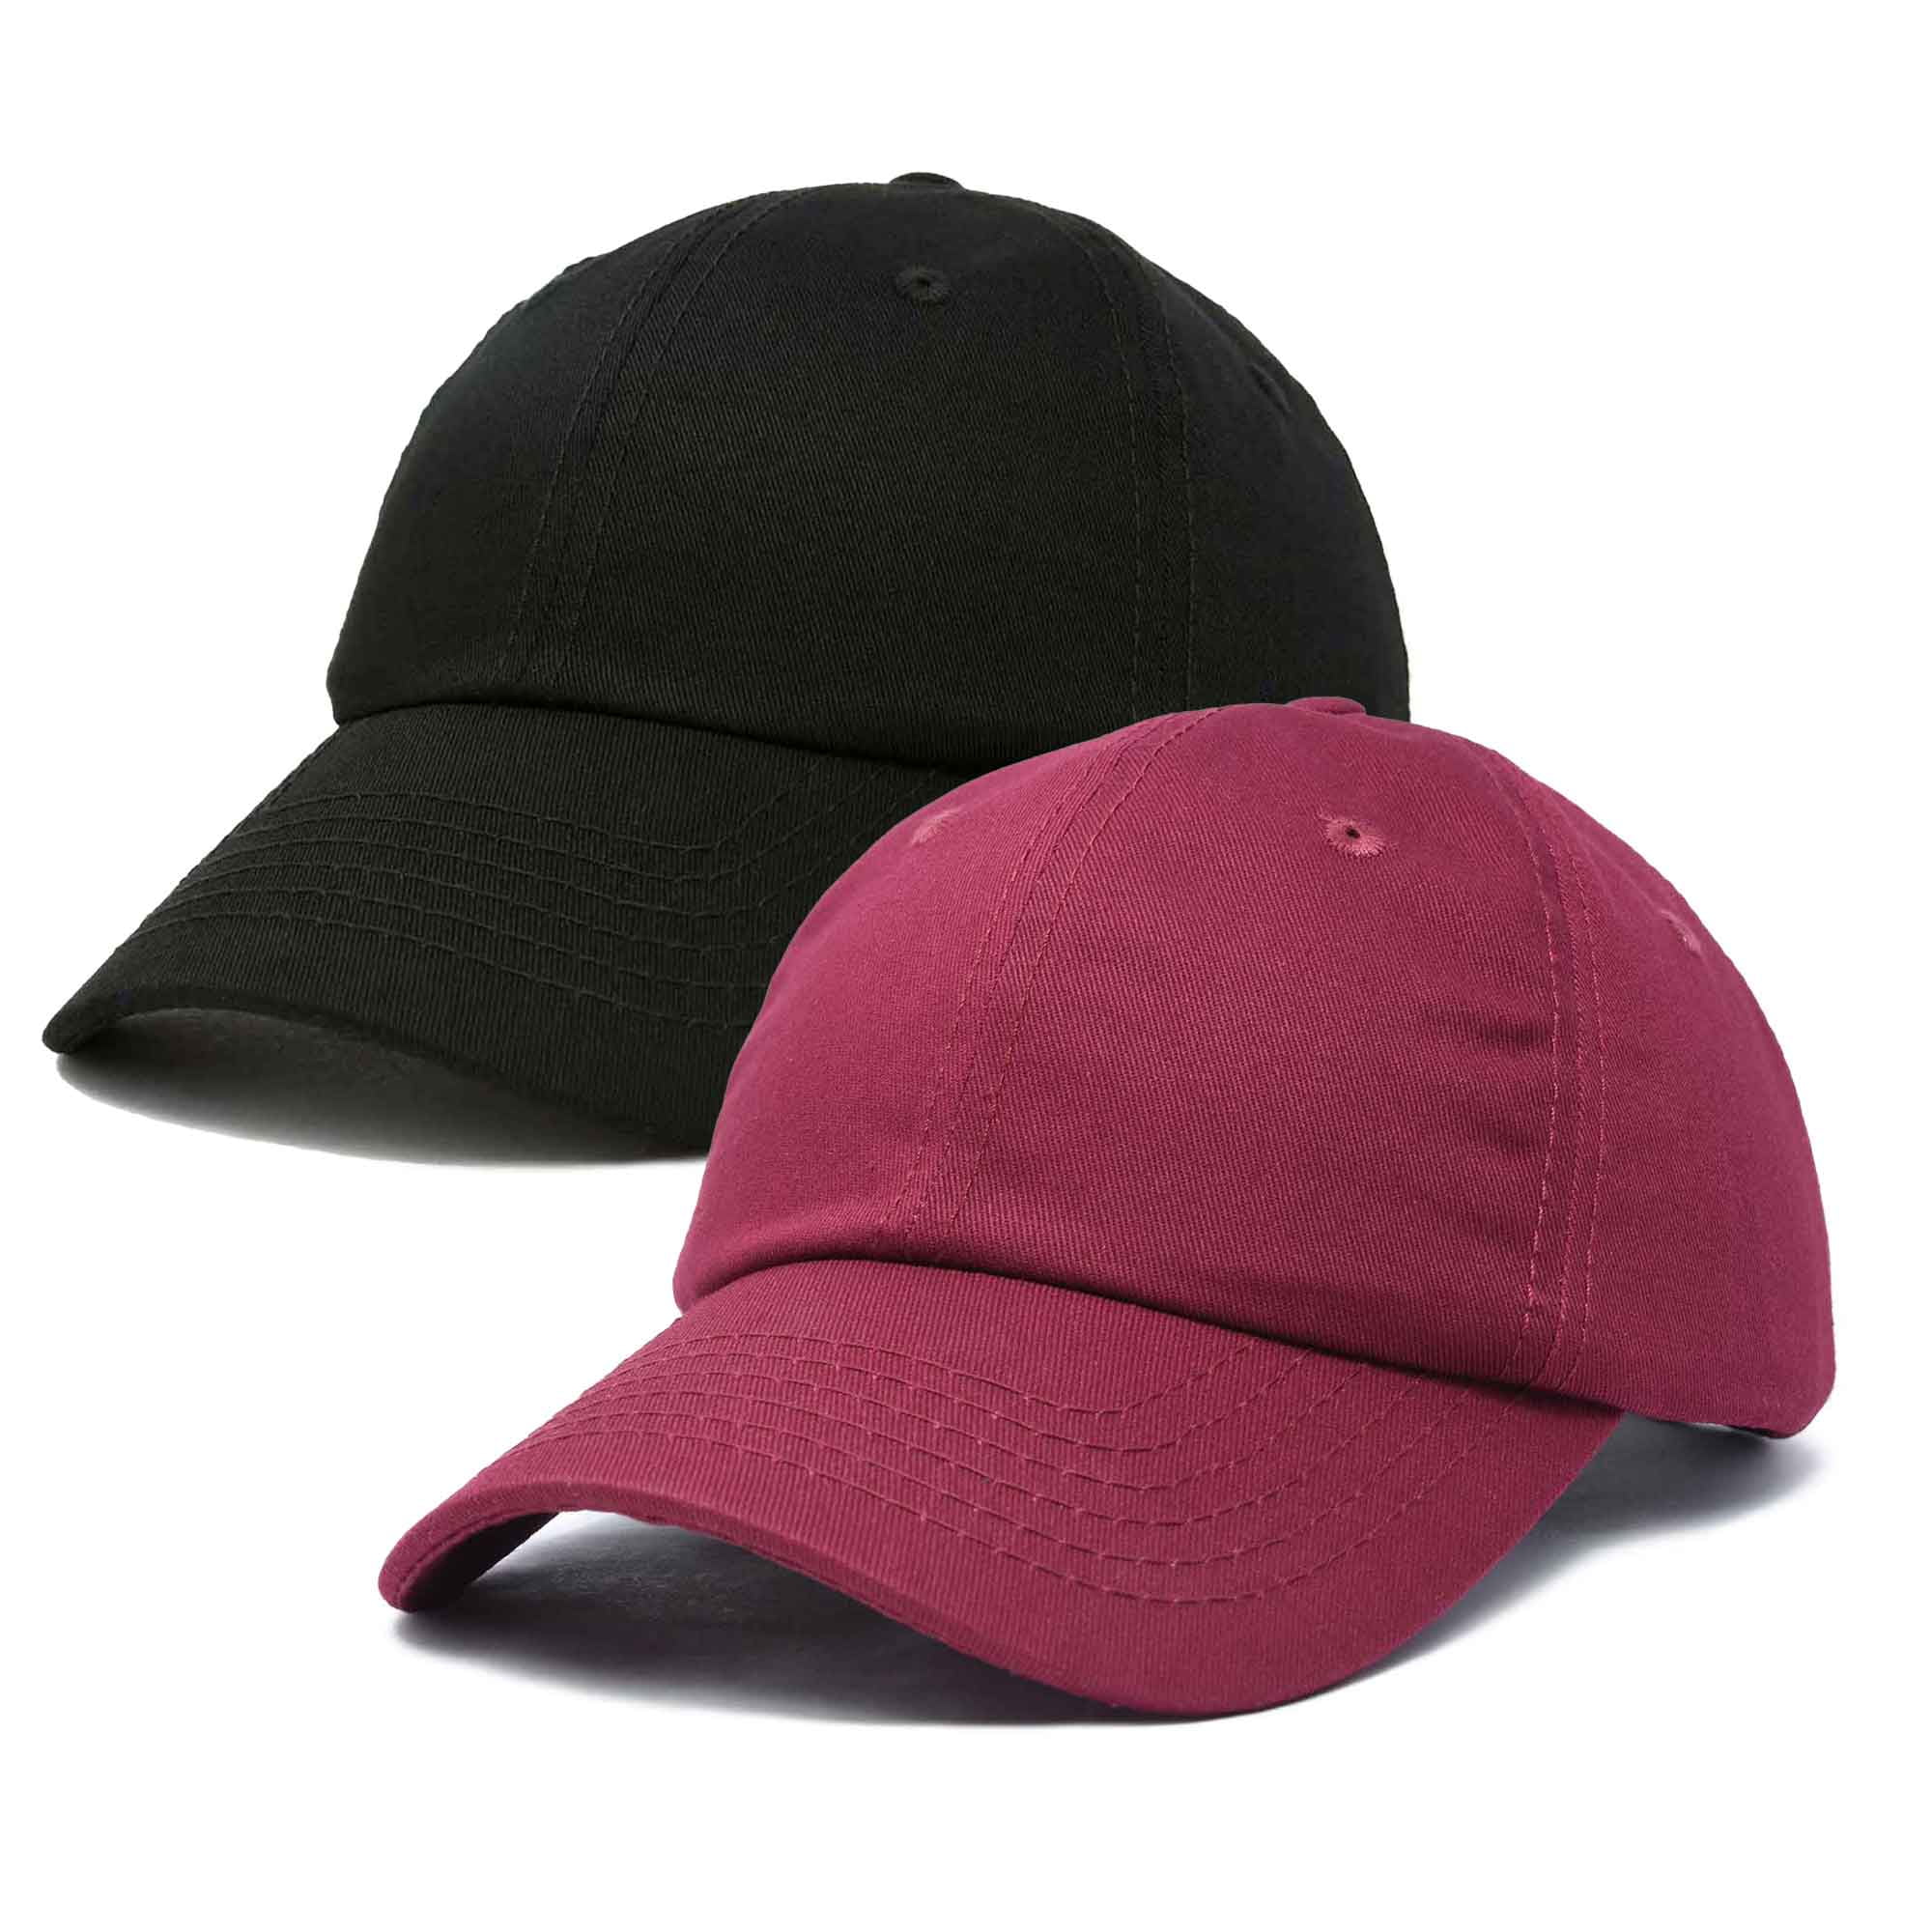 DALIX Plain Dad Hats 2 Pack in Black/Maroon